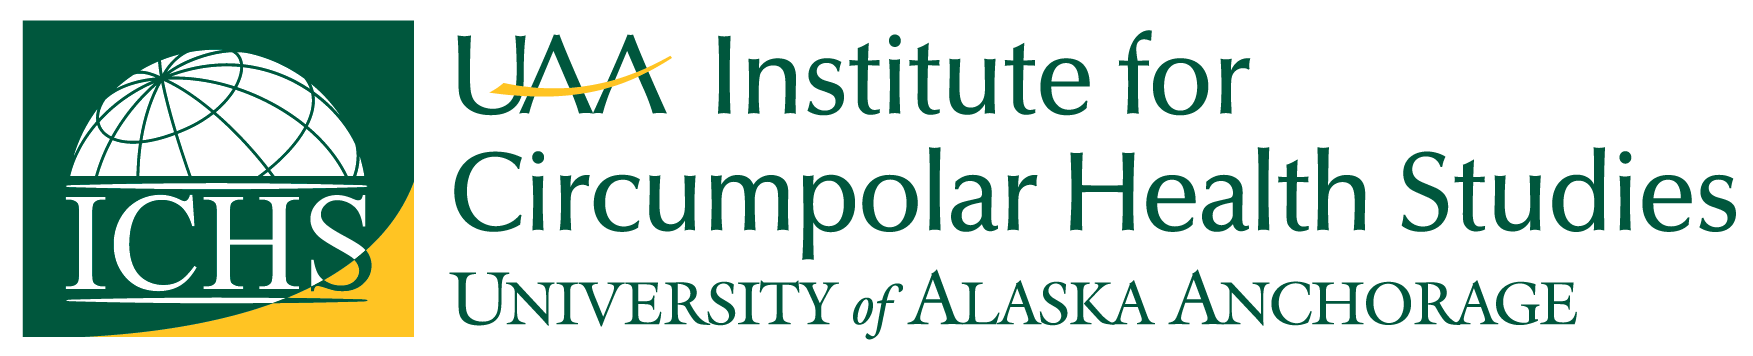 Institute for Circumpolar Health Studies University of Alaska Anchorage